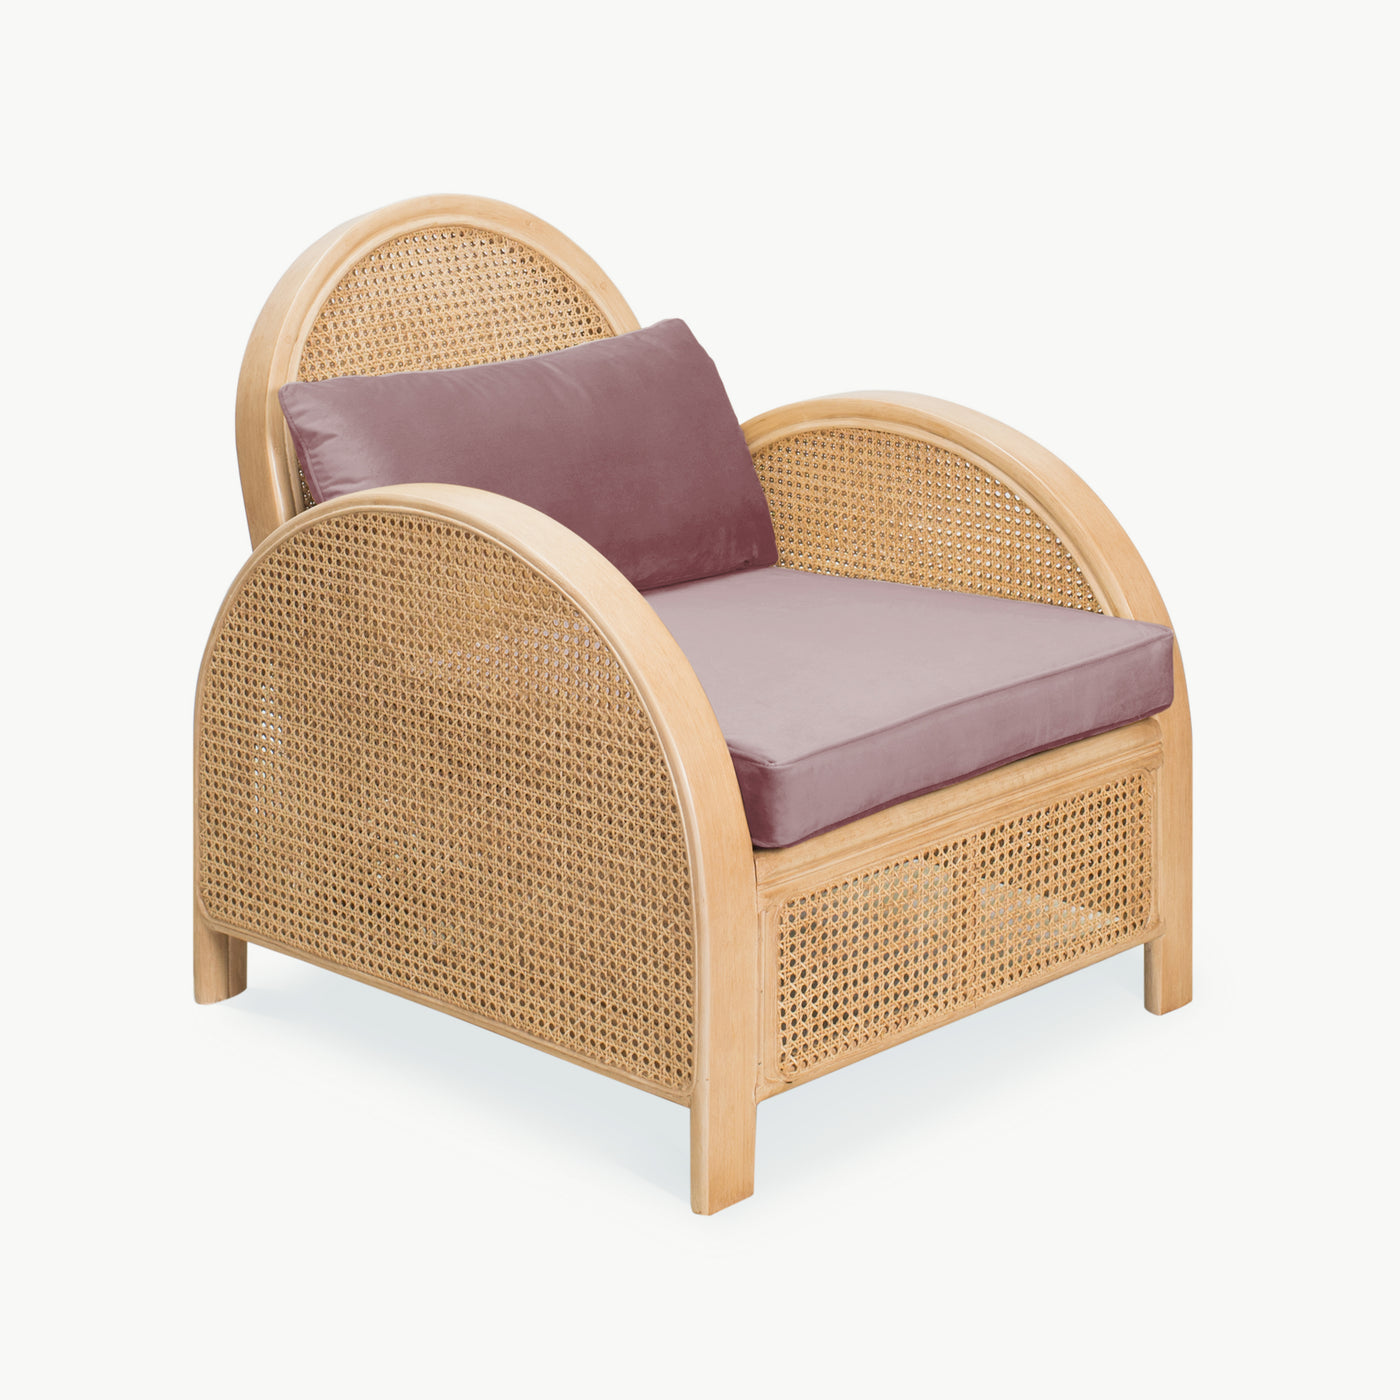 THE BOTANIST Cane Chair - Lotus